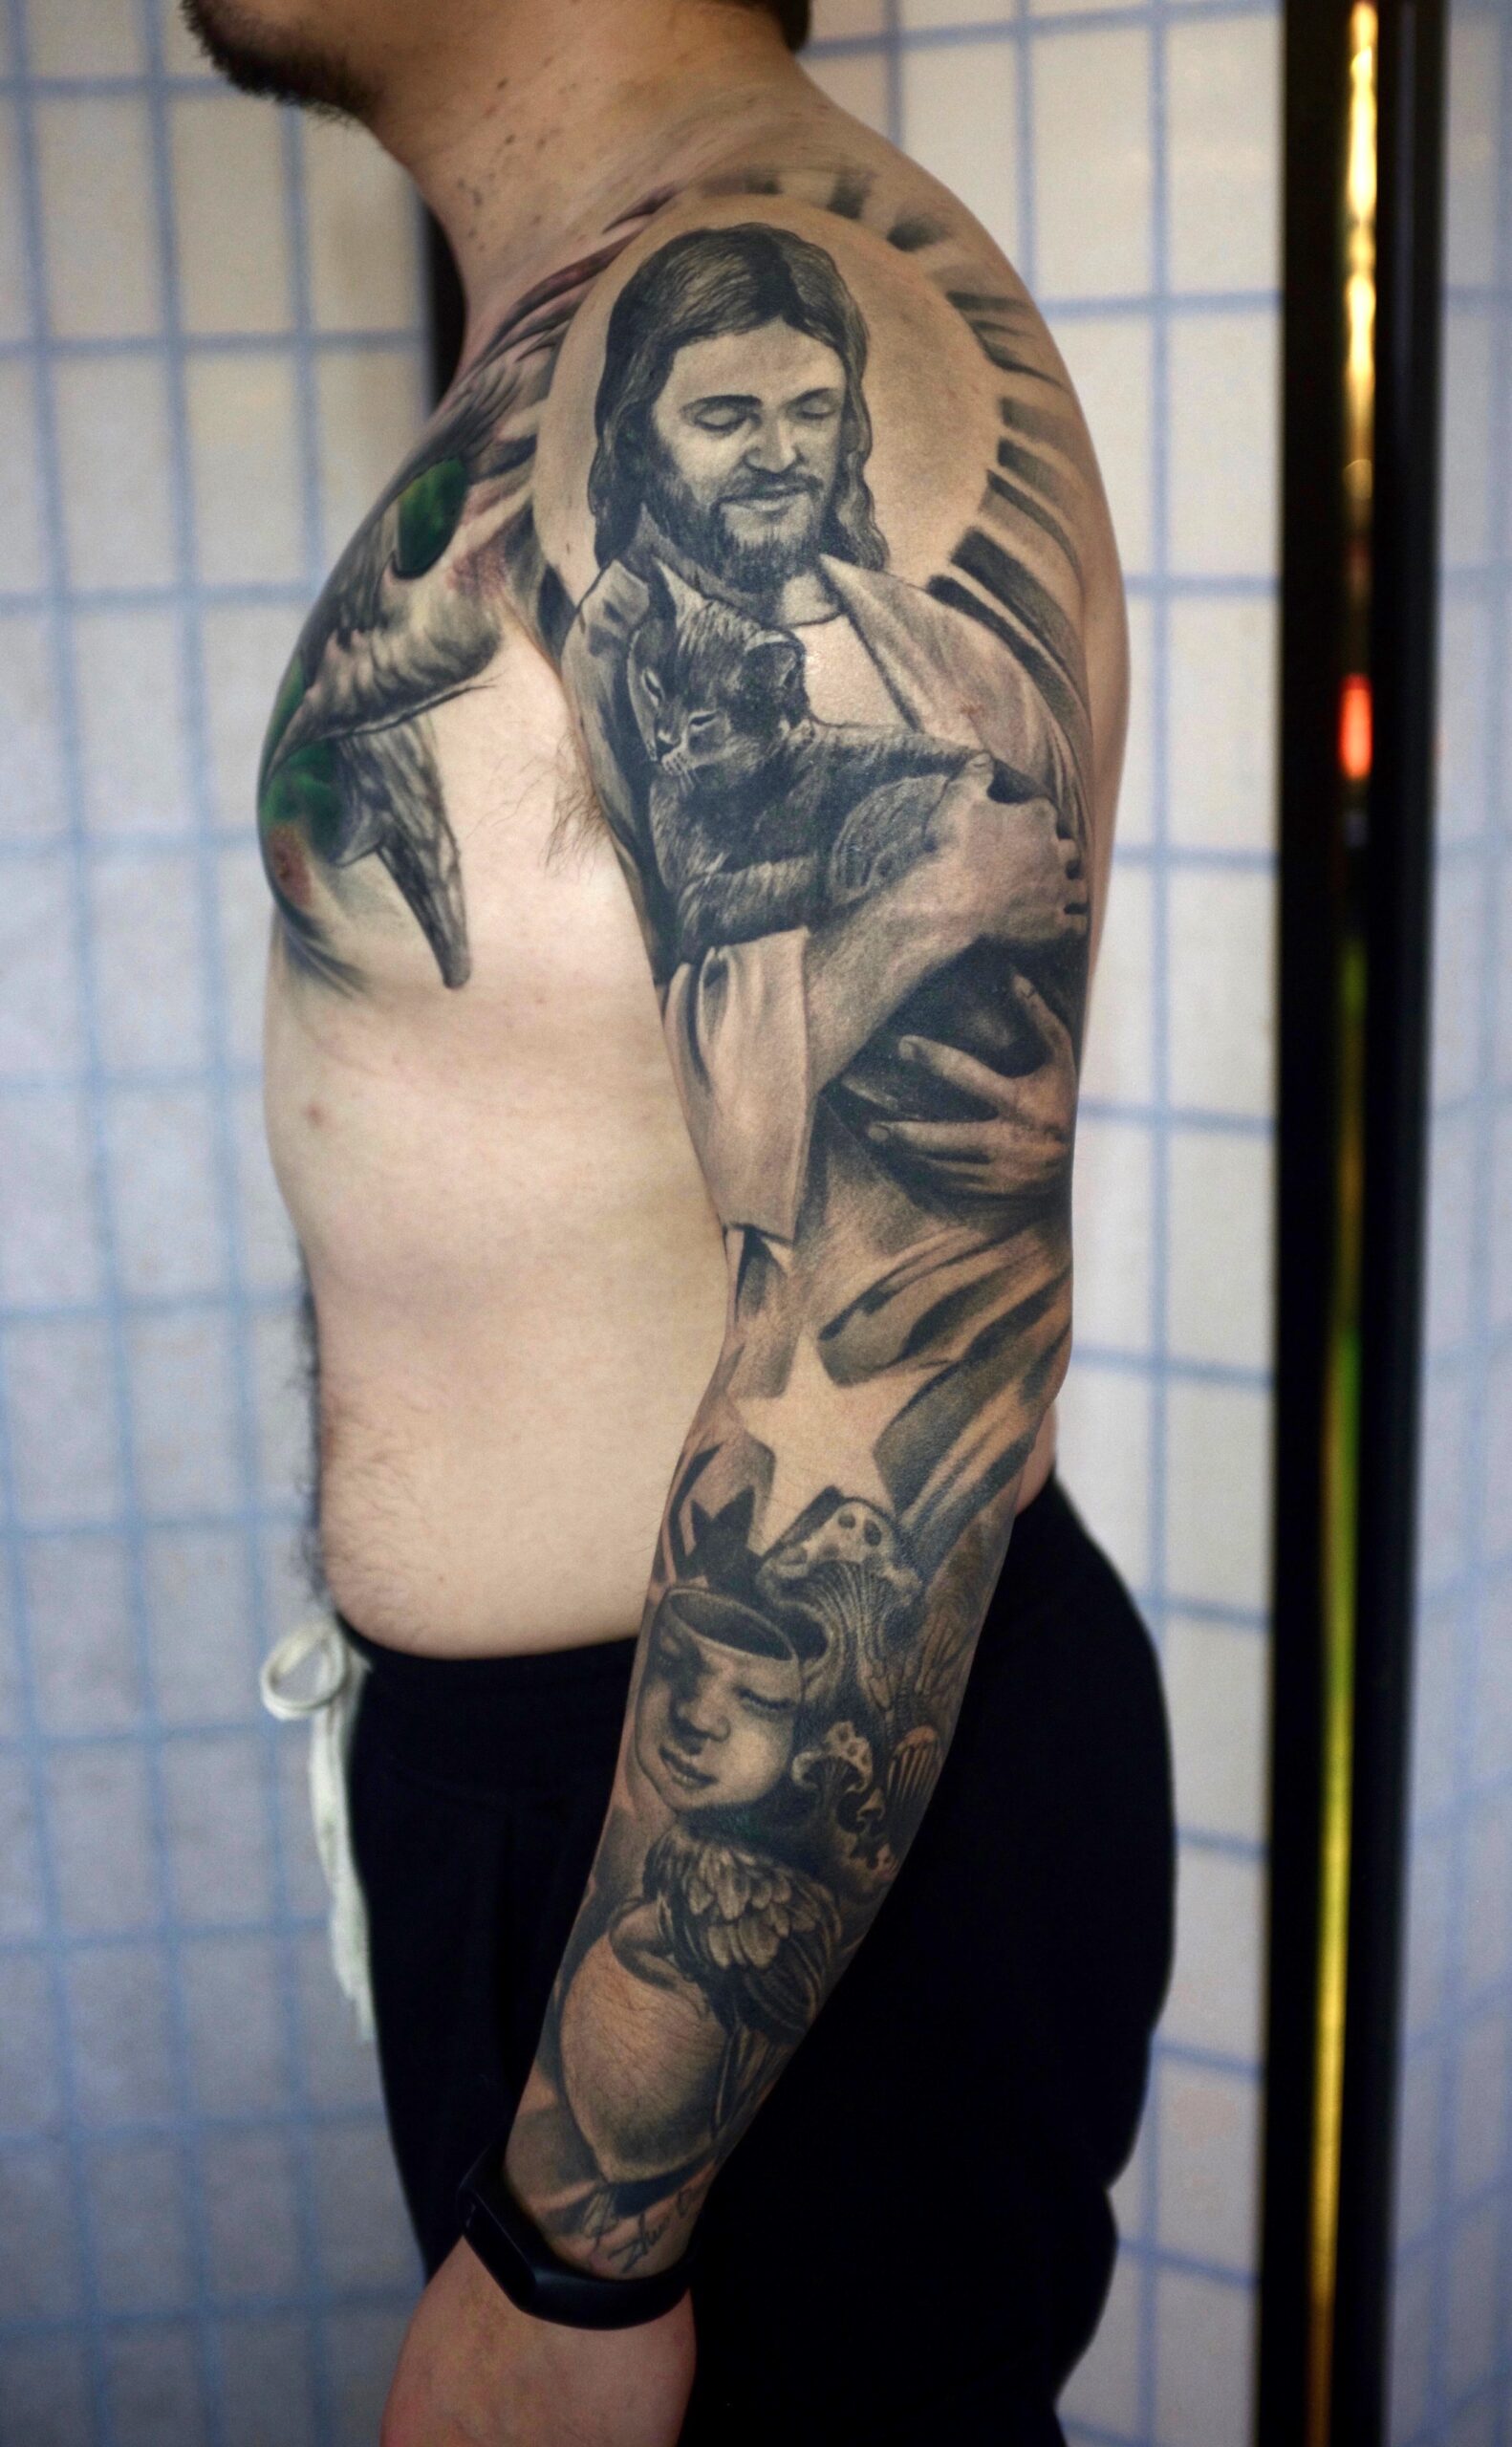 zhuo dan ting tattoo work 卓丹婷纹身作品 耶稣和猫花臂纹身 1